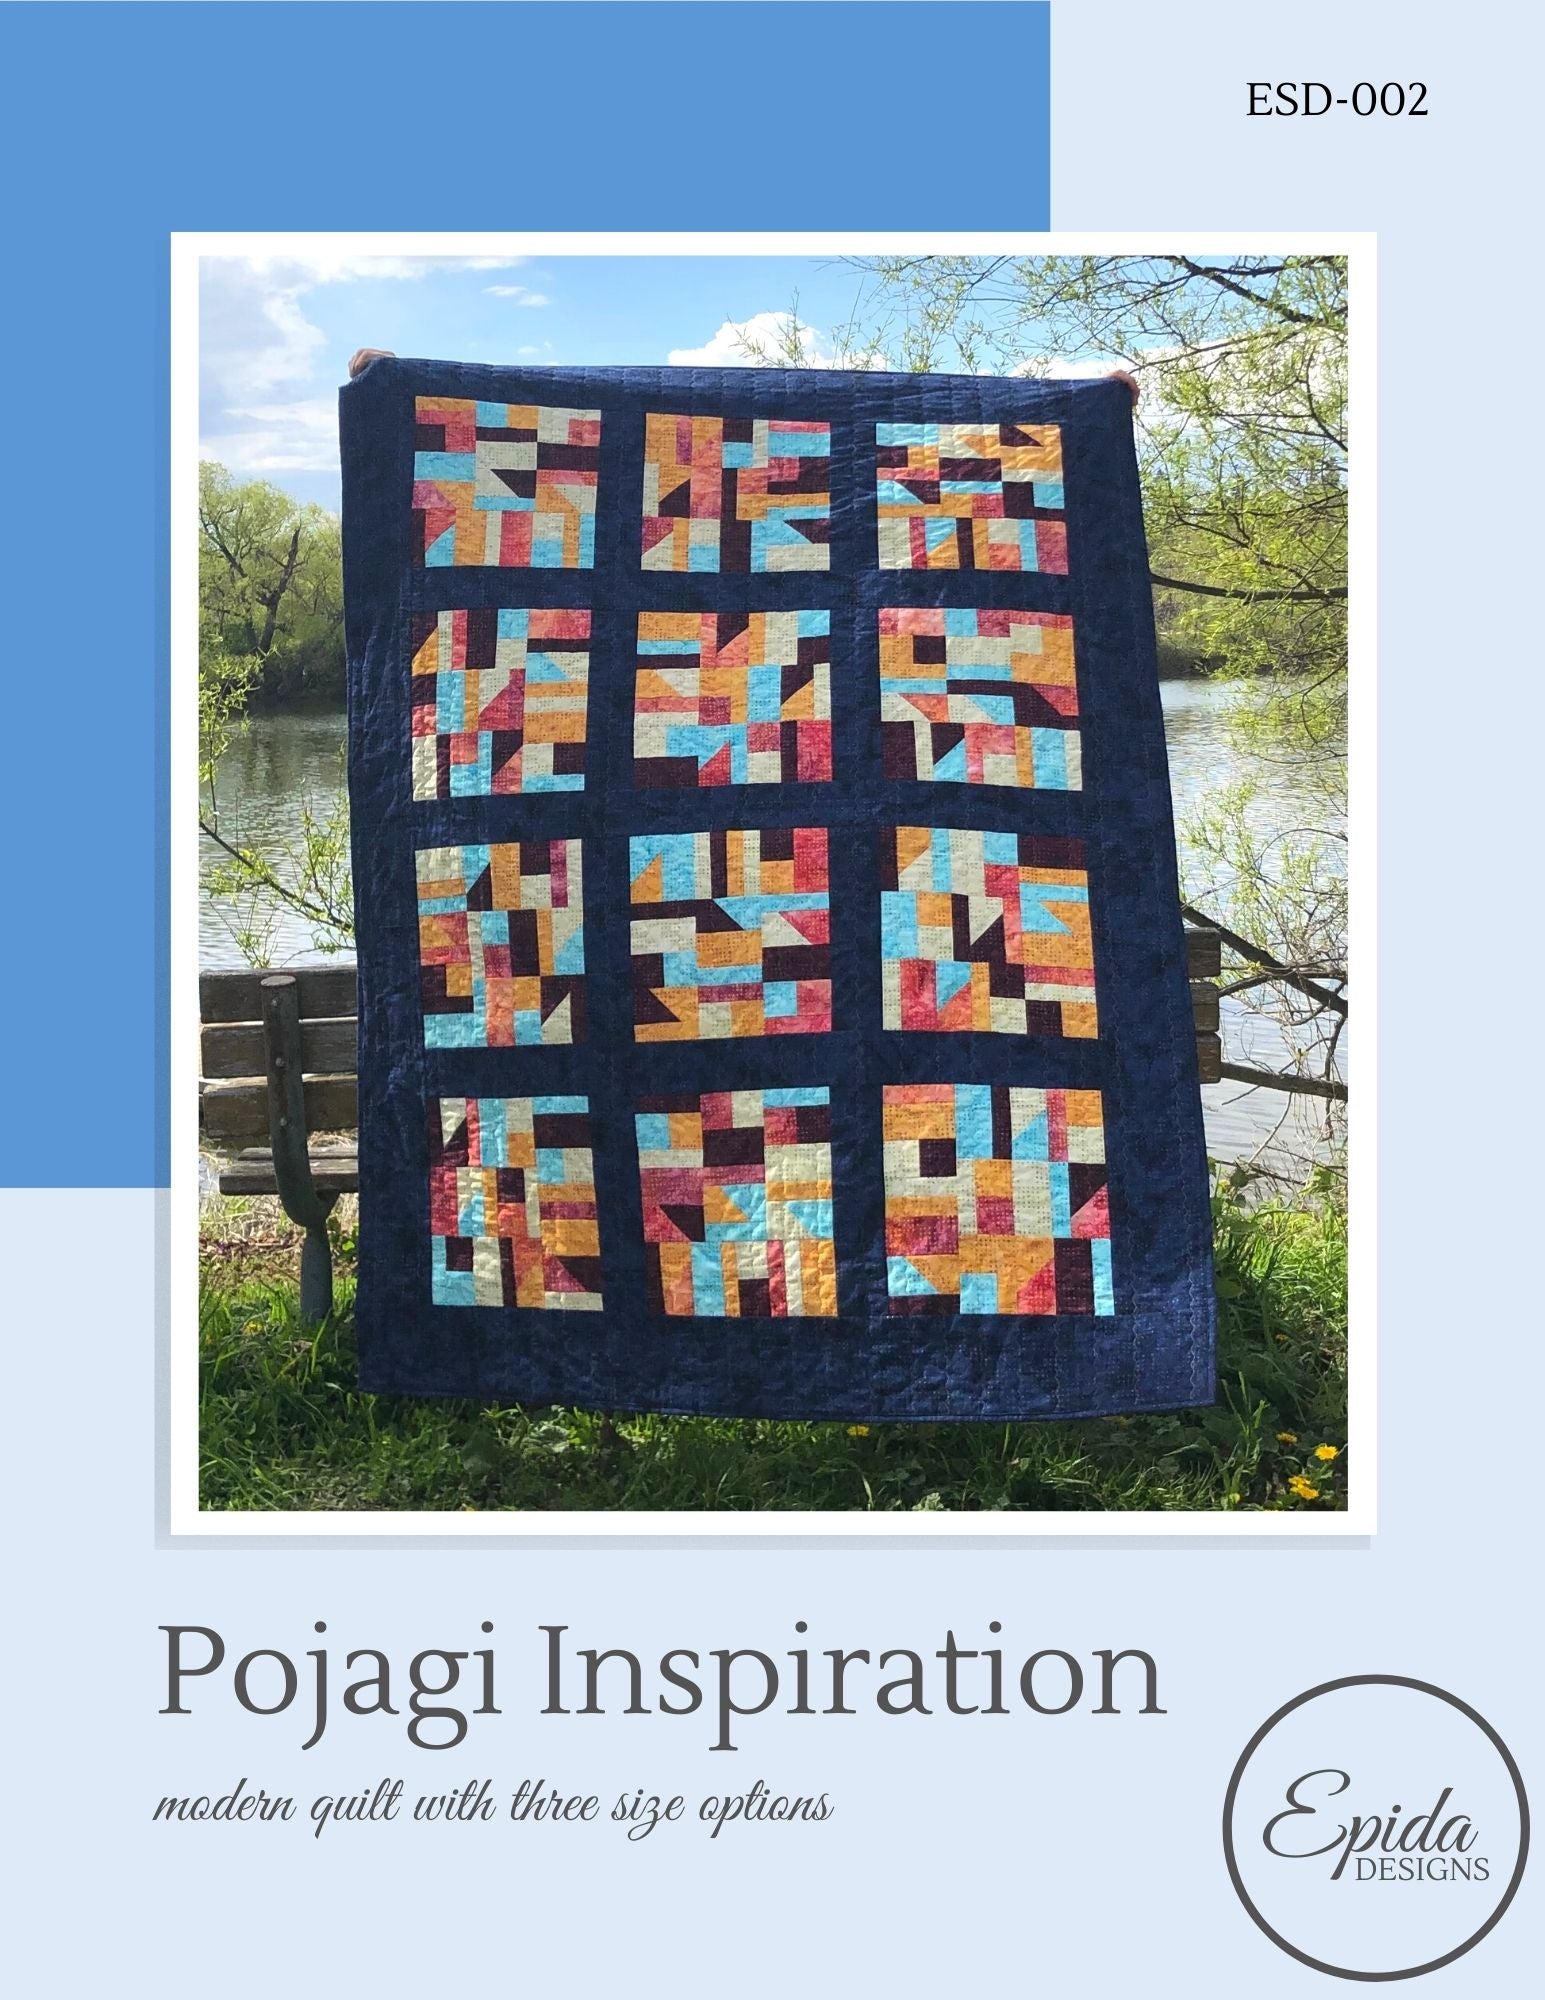 Pojagi Inspiration quilt pattern by Epida Studio.